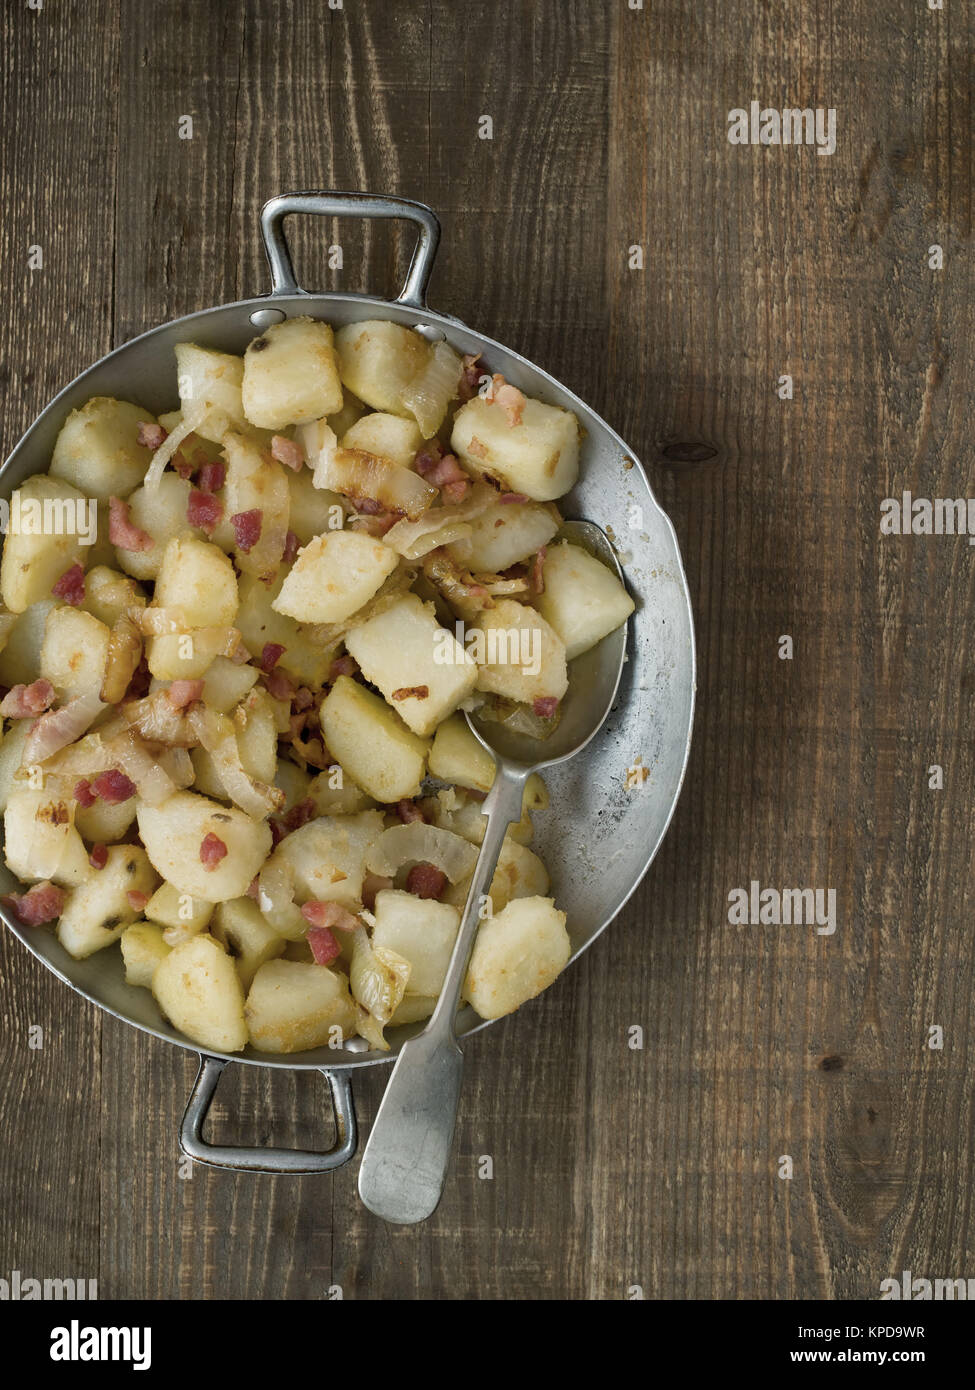 rustic german pan fried potato bratkartoffeln Stock Photo